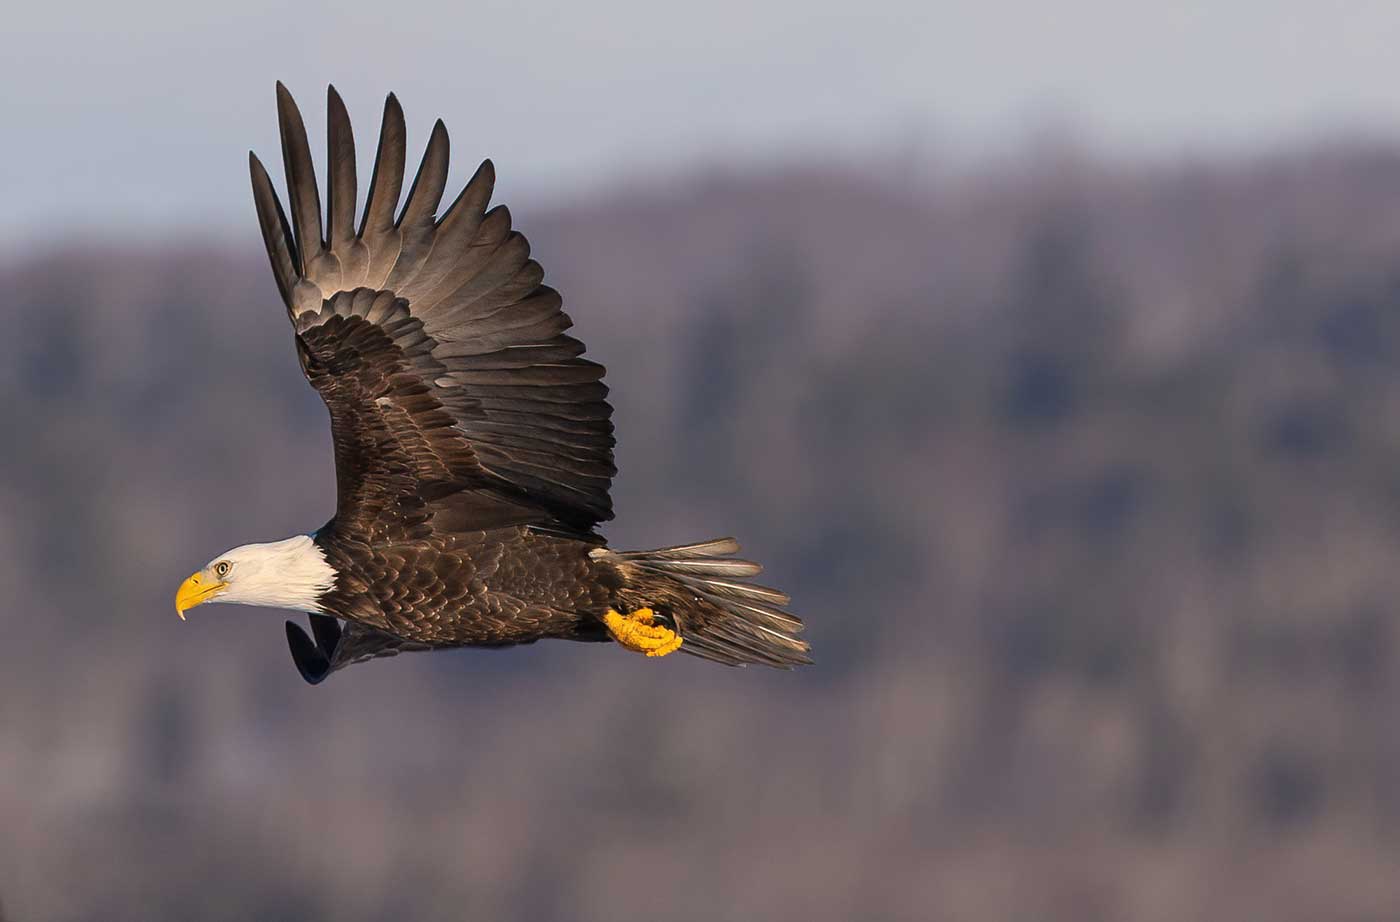 Bald Eagle soaring in front of blurred background, headed left